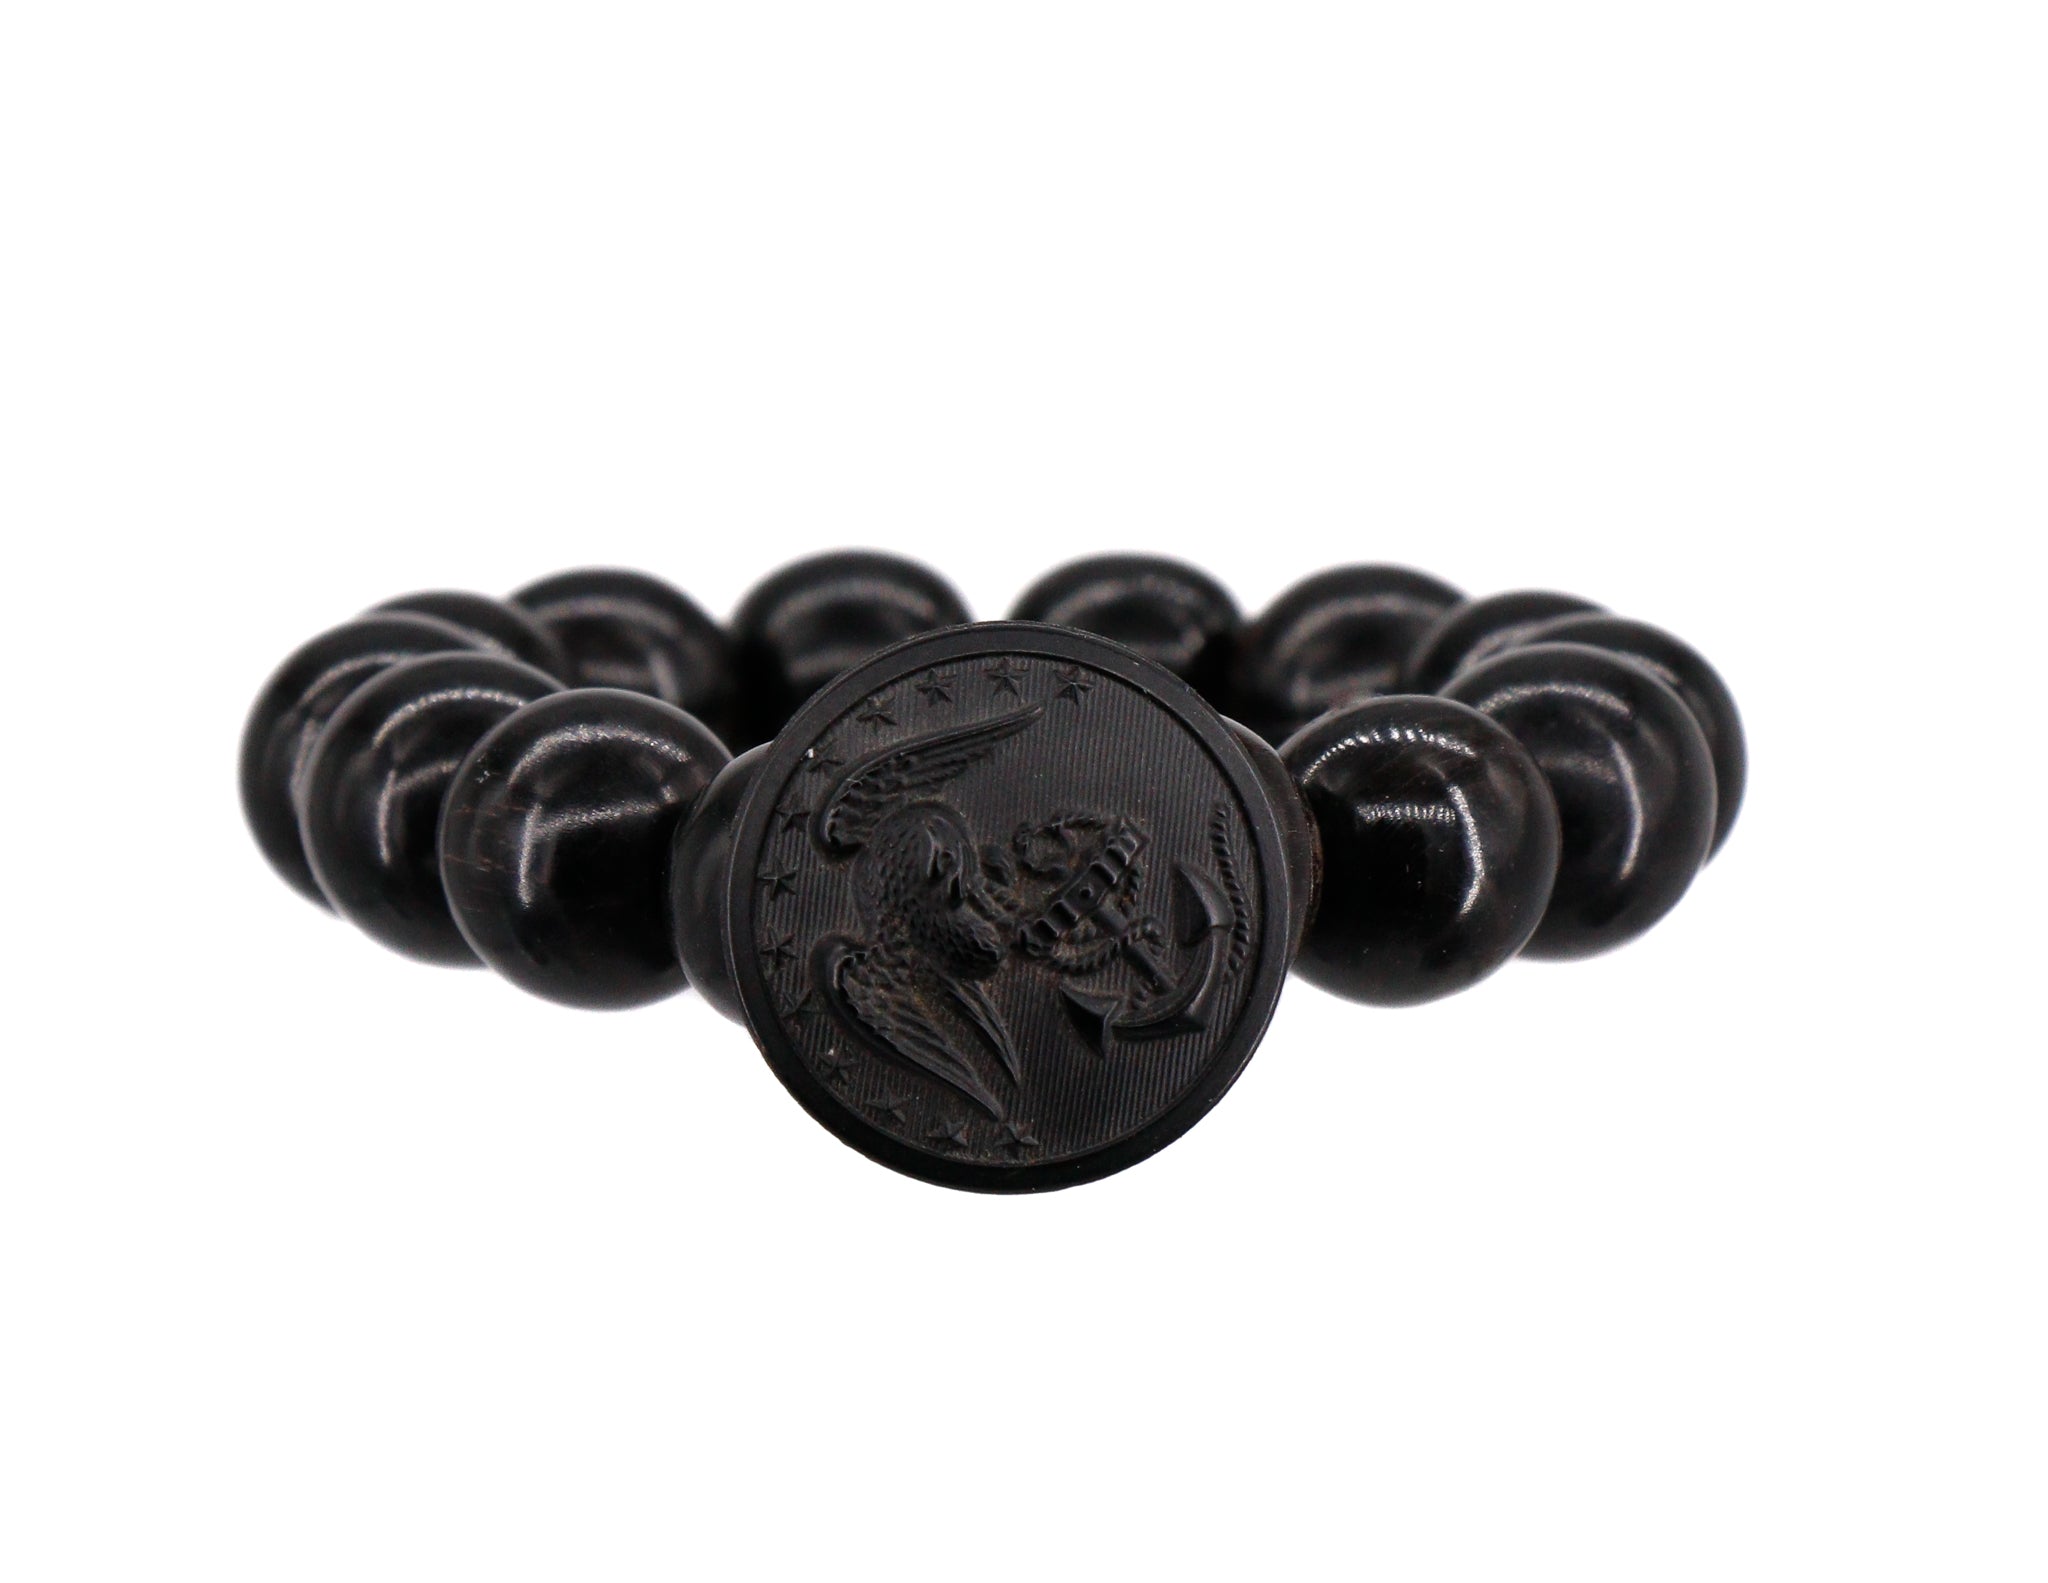 Black buffalo horn bracelet with a military button